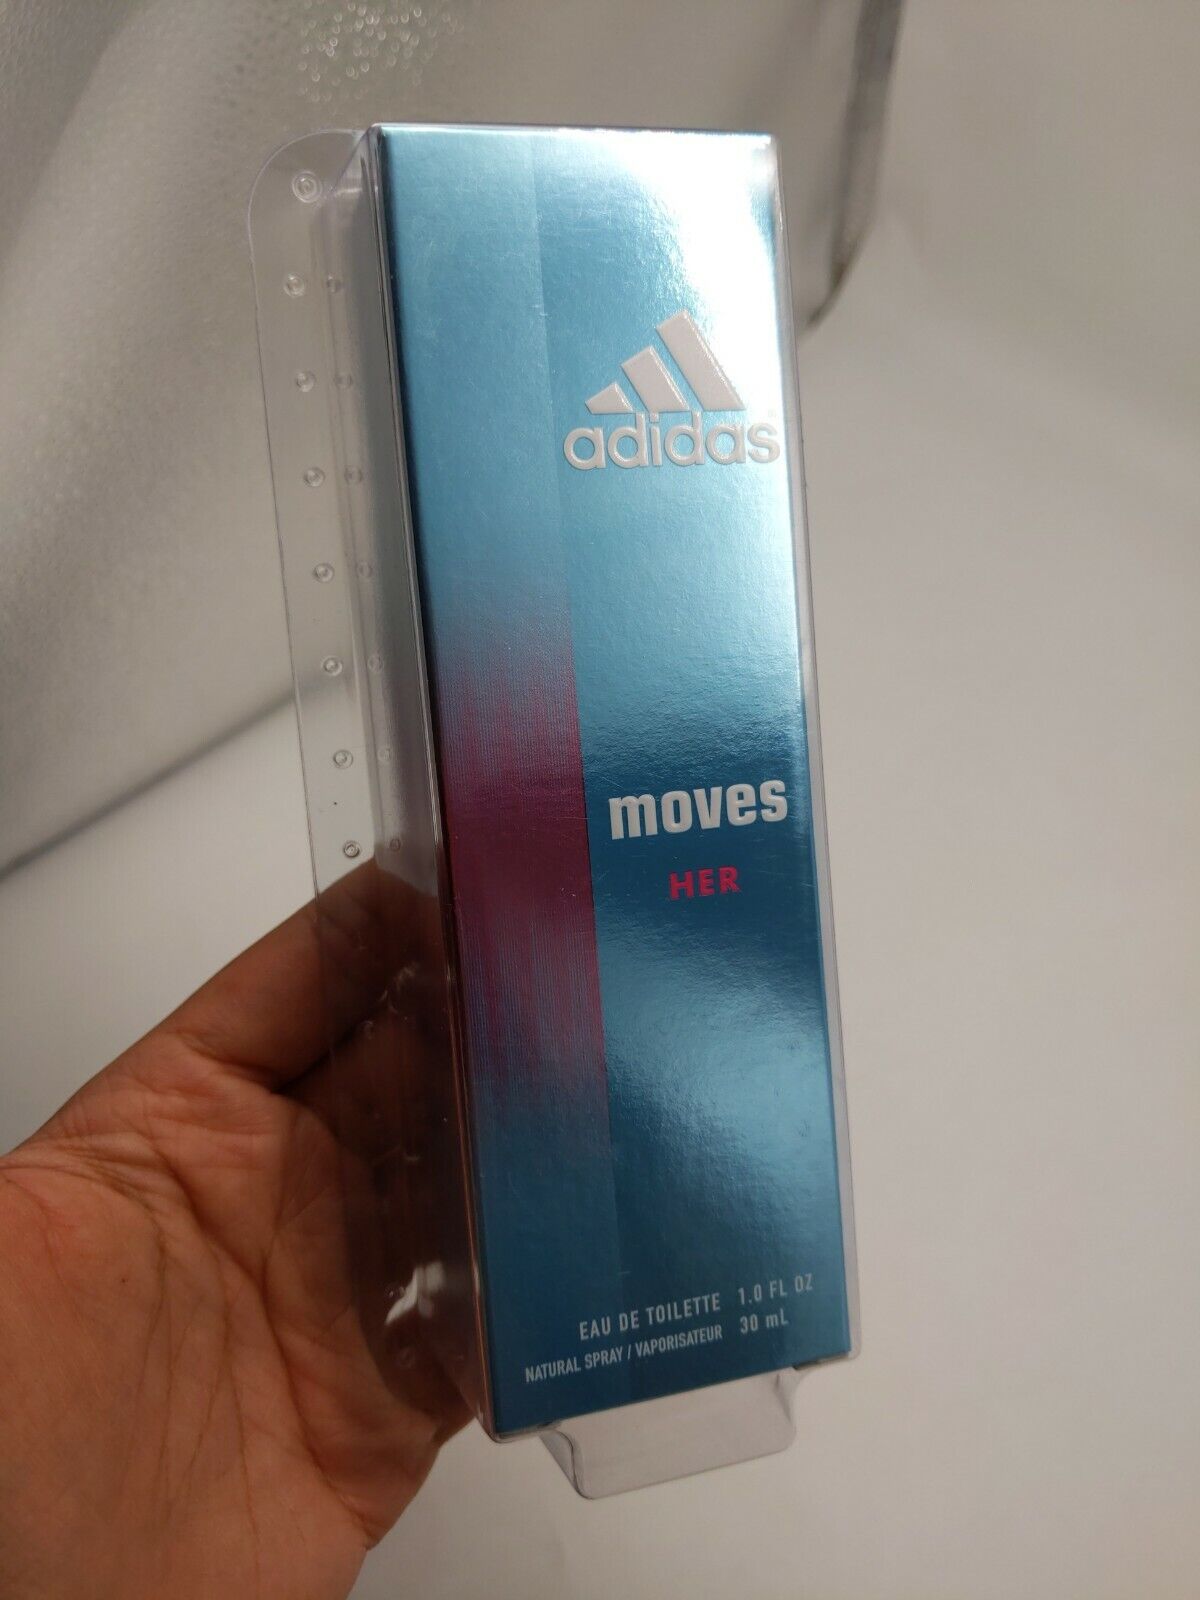 Adidas Moves Her Eau de Toilette 1 oz 30 ml Natural Spray Brand New